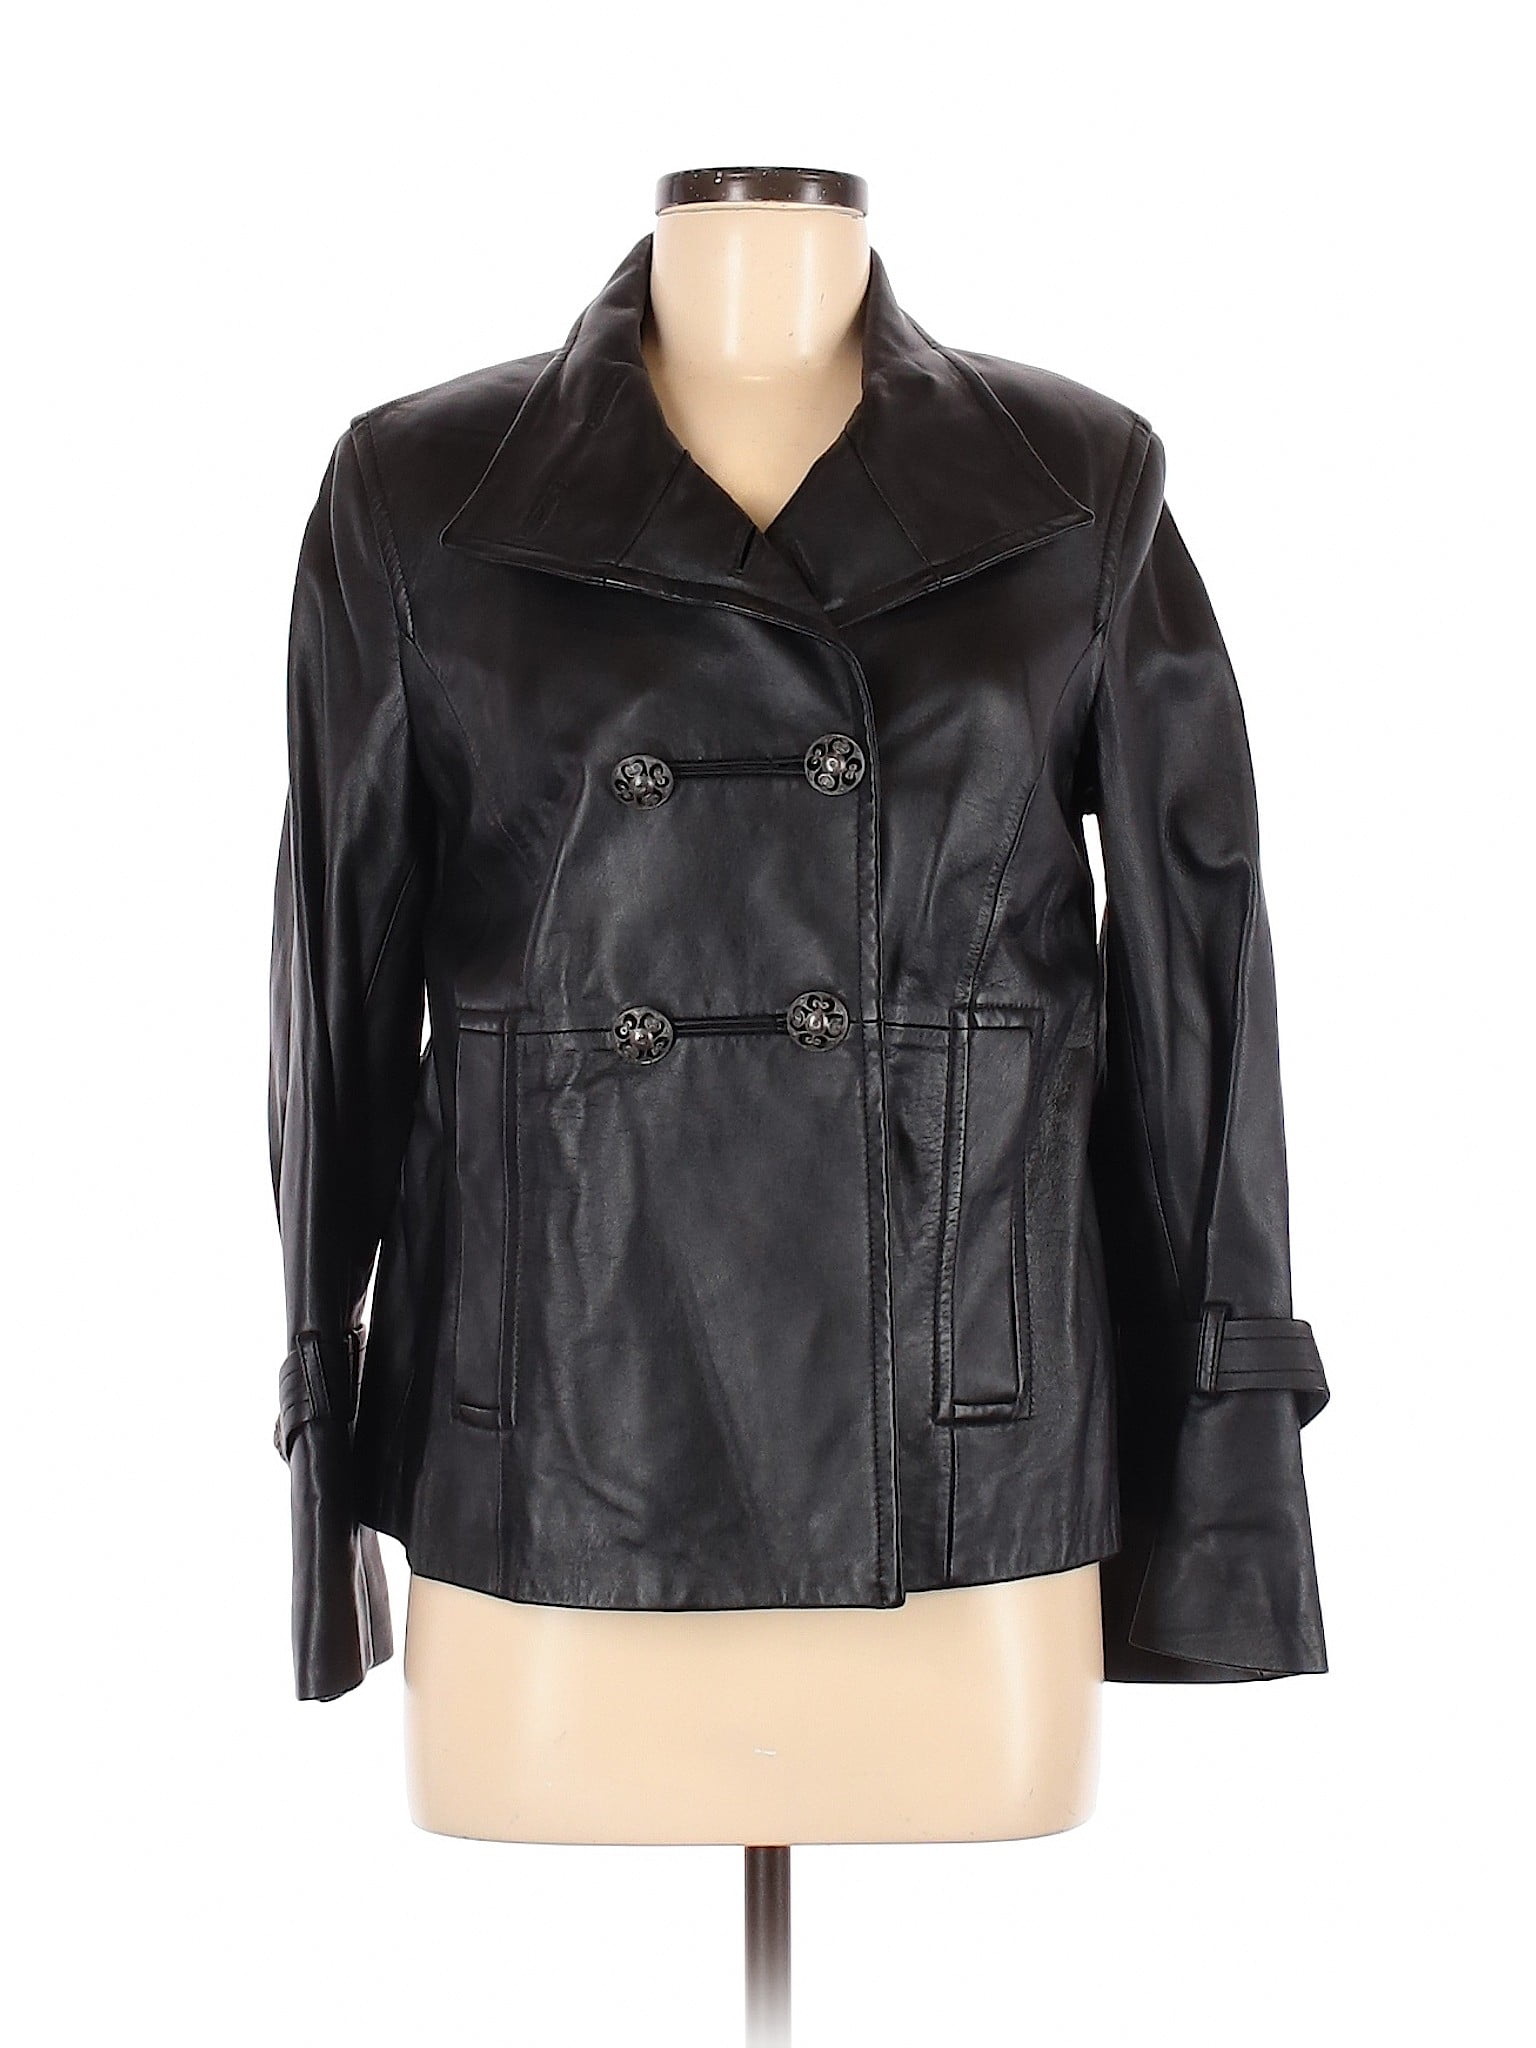 preston and york leather jacket